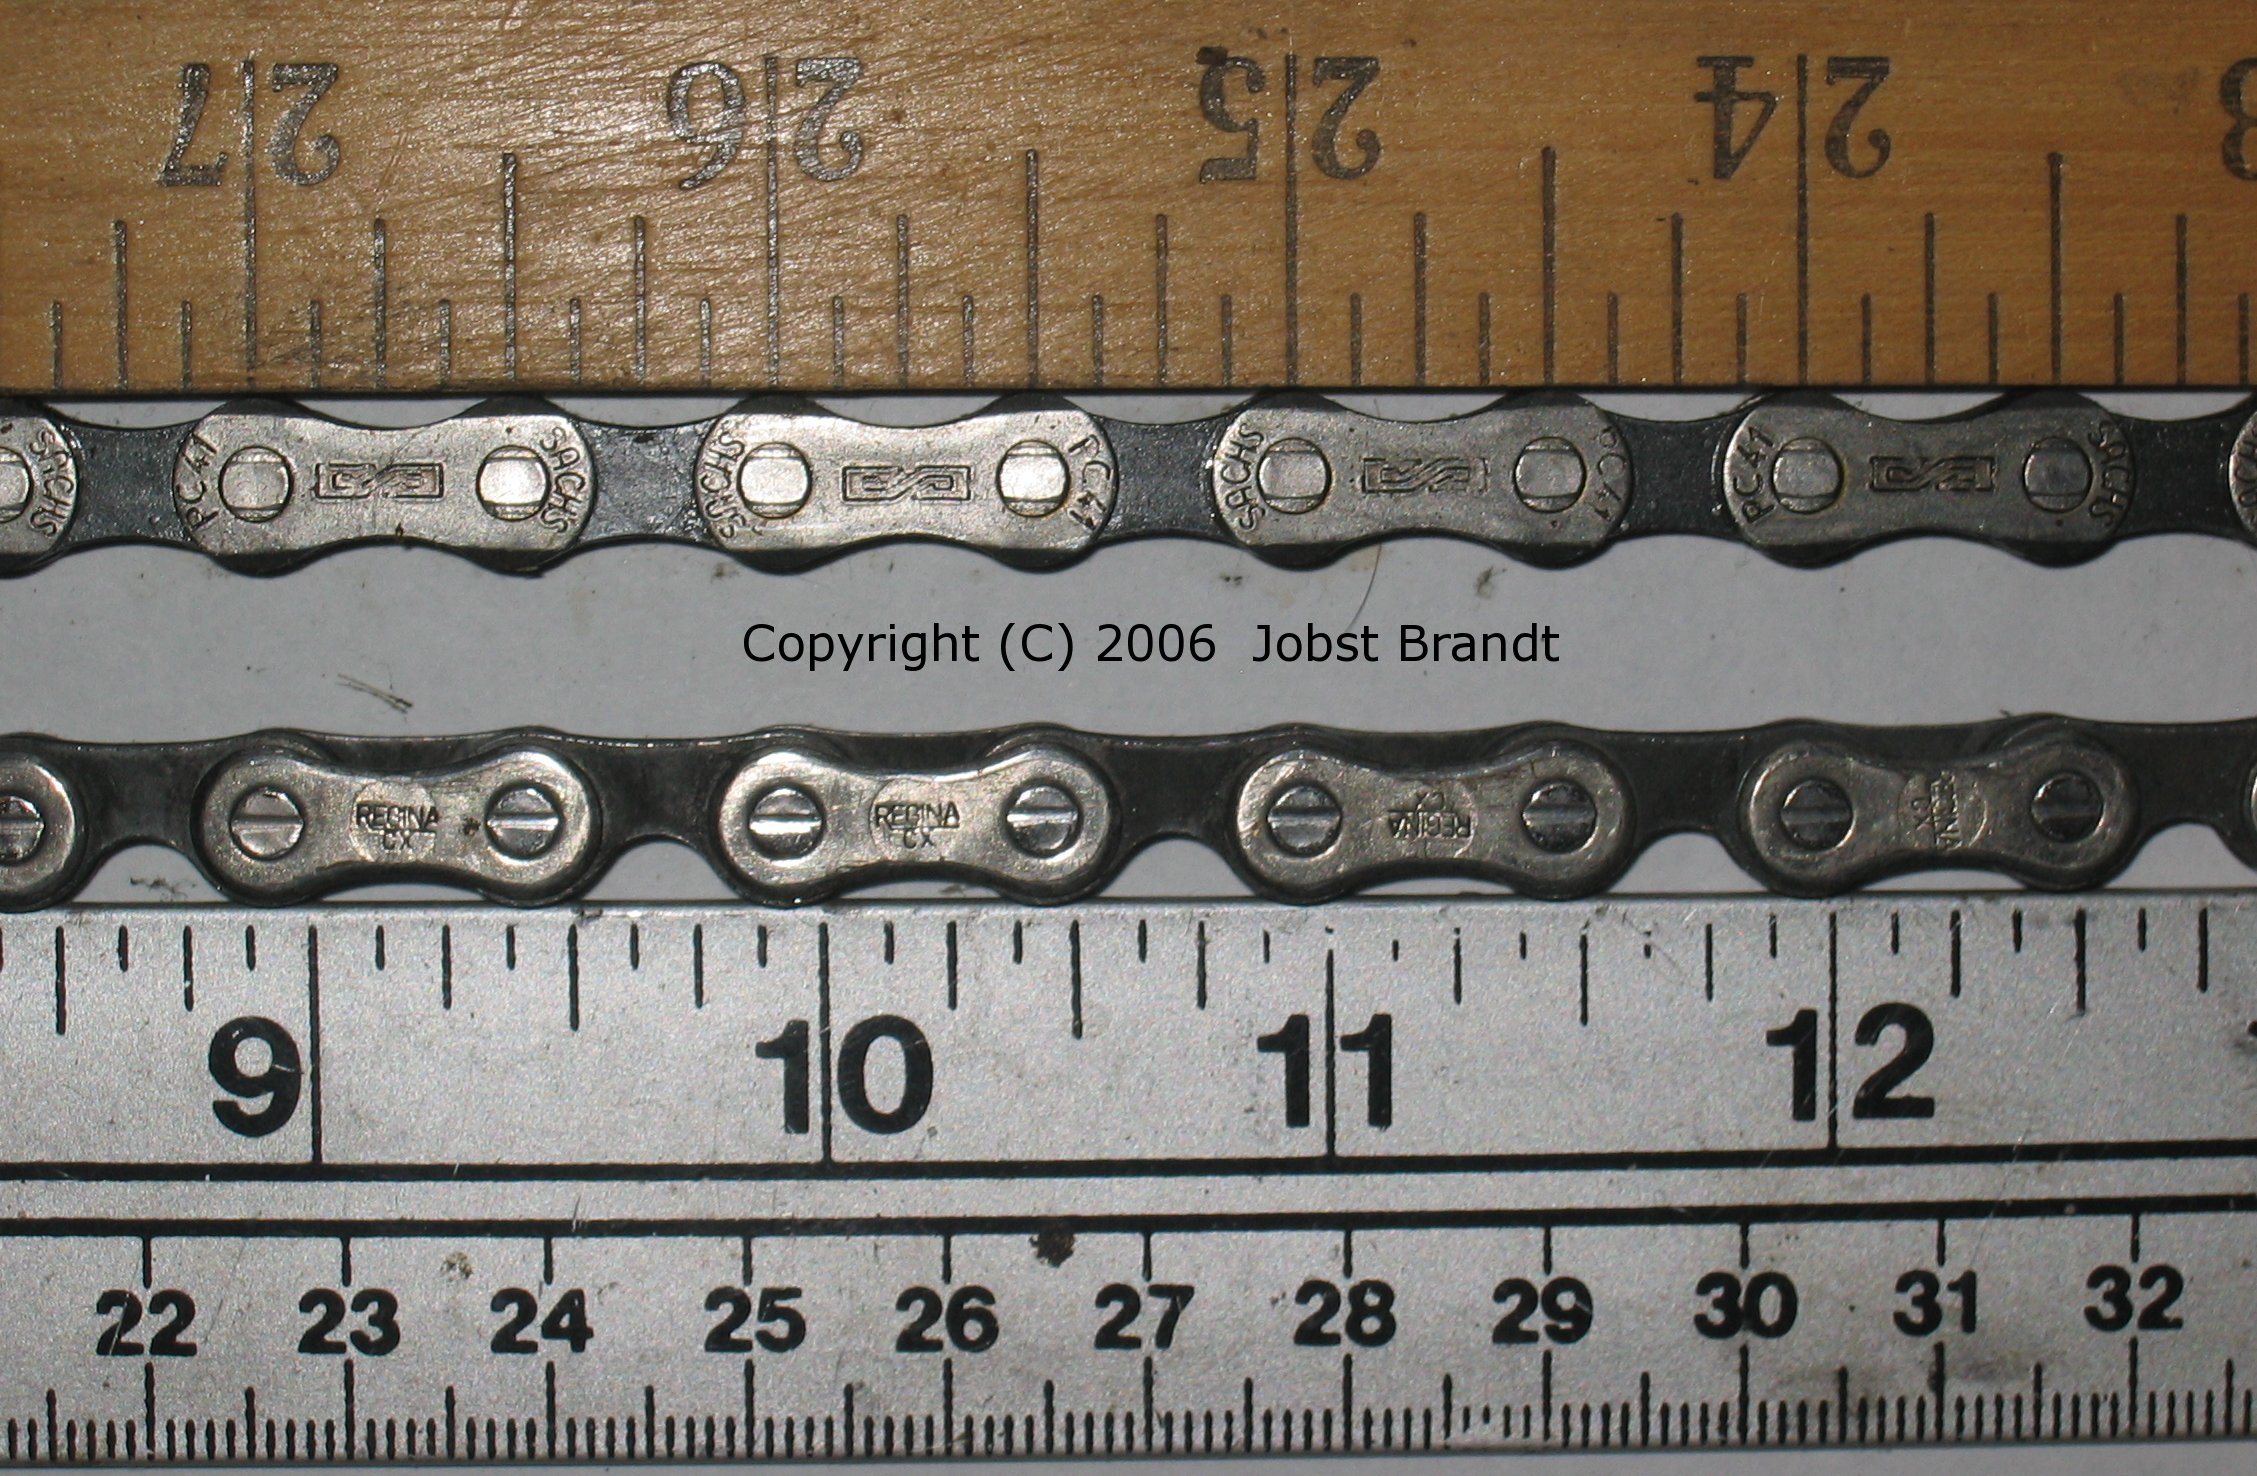 bike chain measuring tool